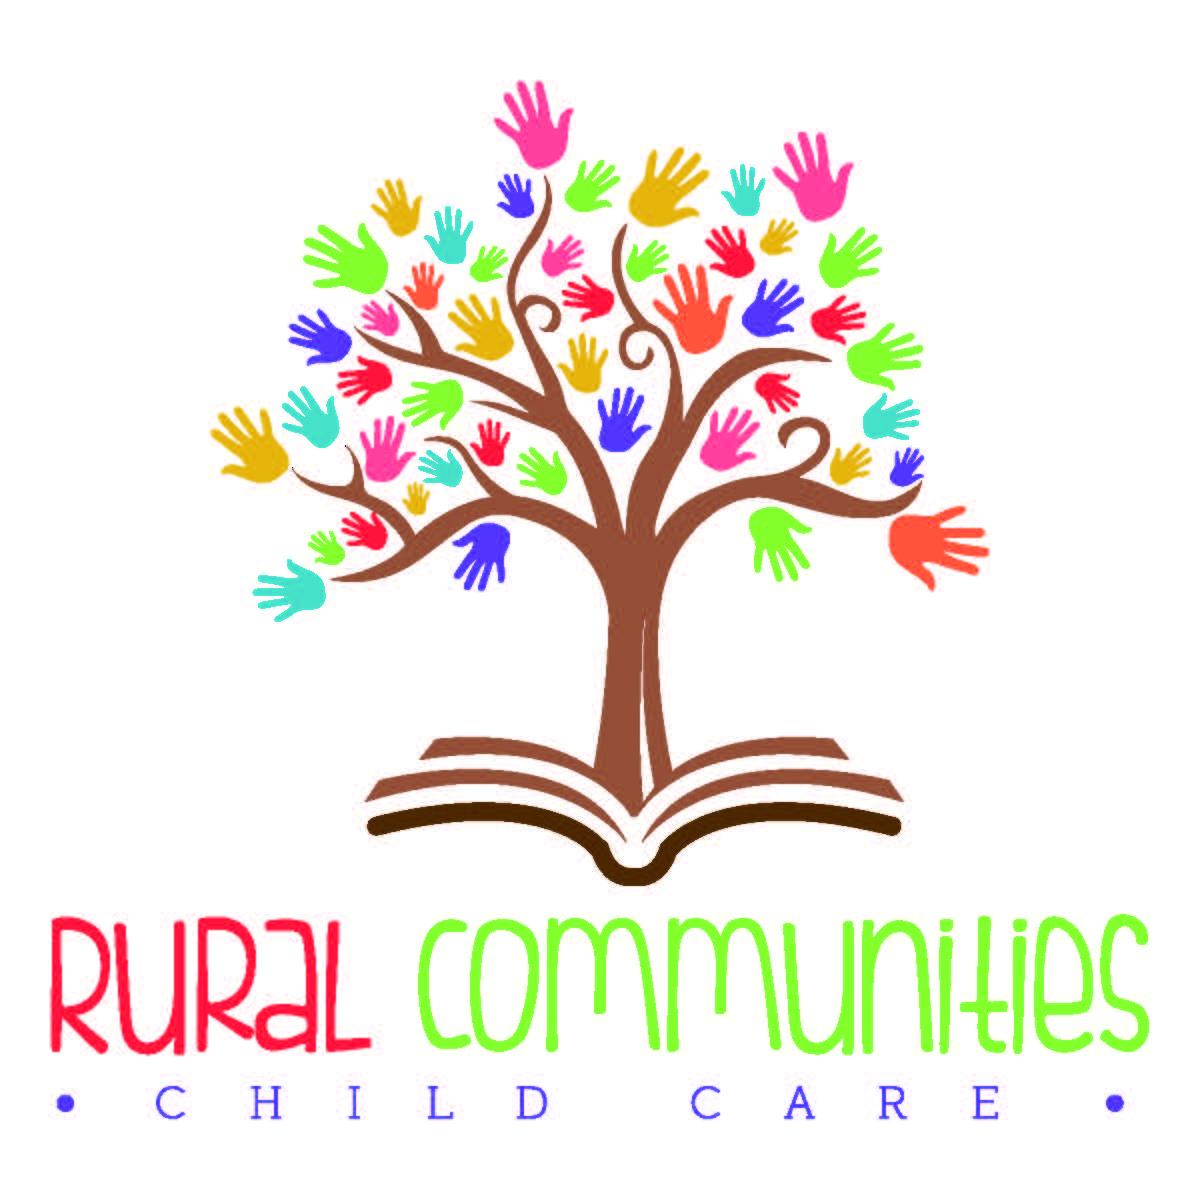 Rccc Logo - Rural Communities Child Care Inc. 2019. Ukiah